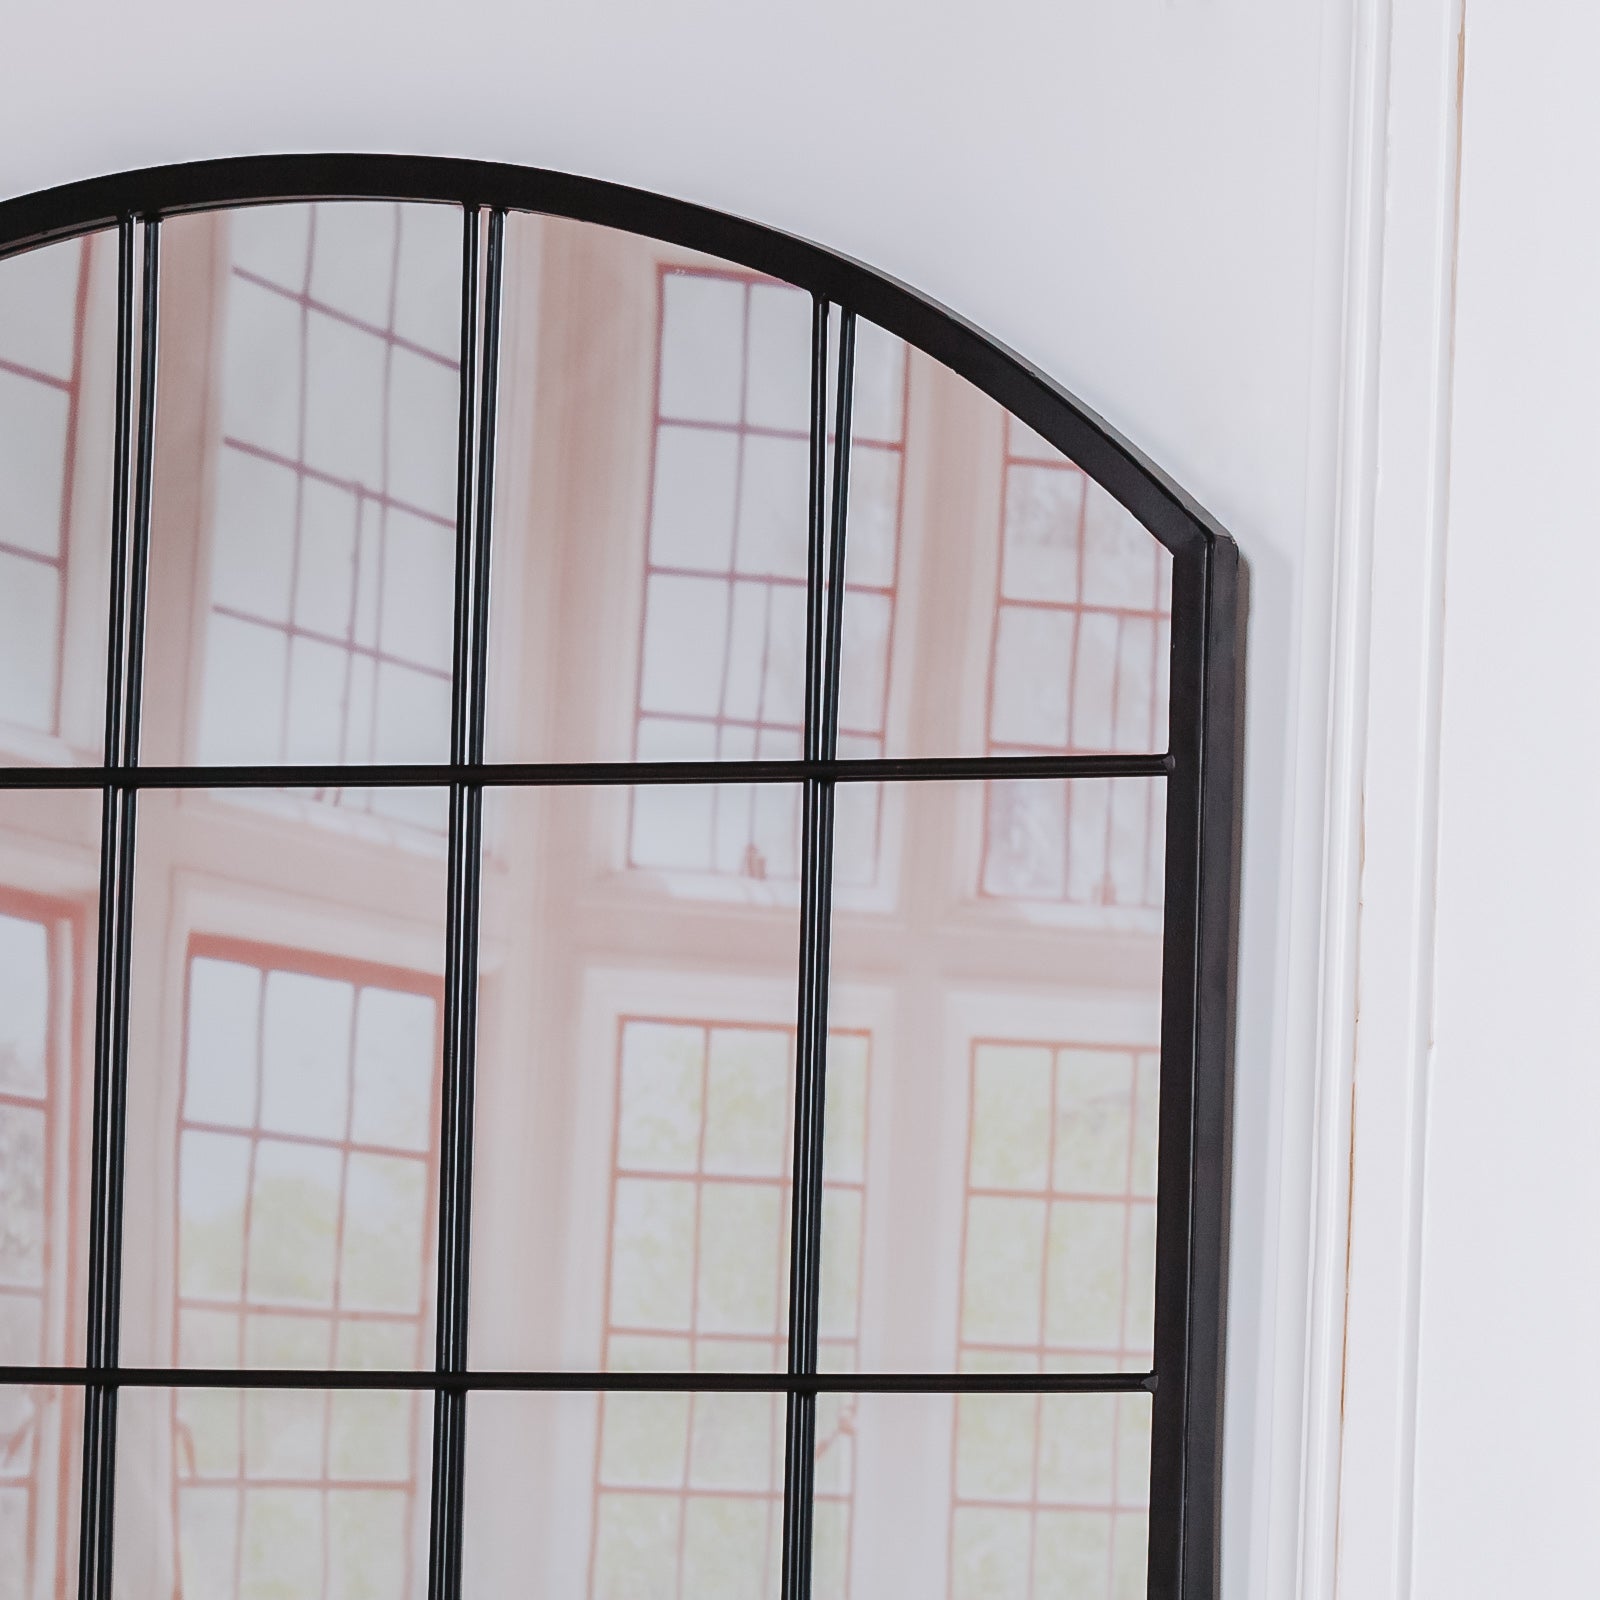 Sentire Pitch Black Arched Window Mirror - 76cm x 91cm